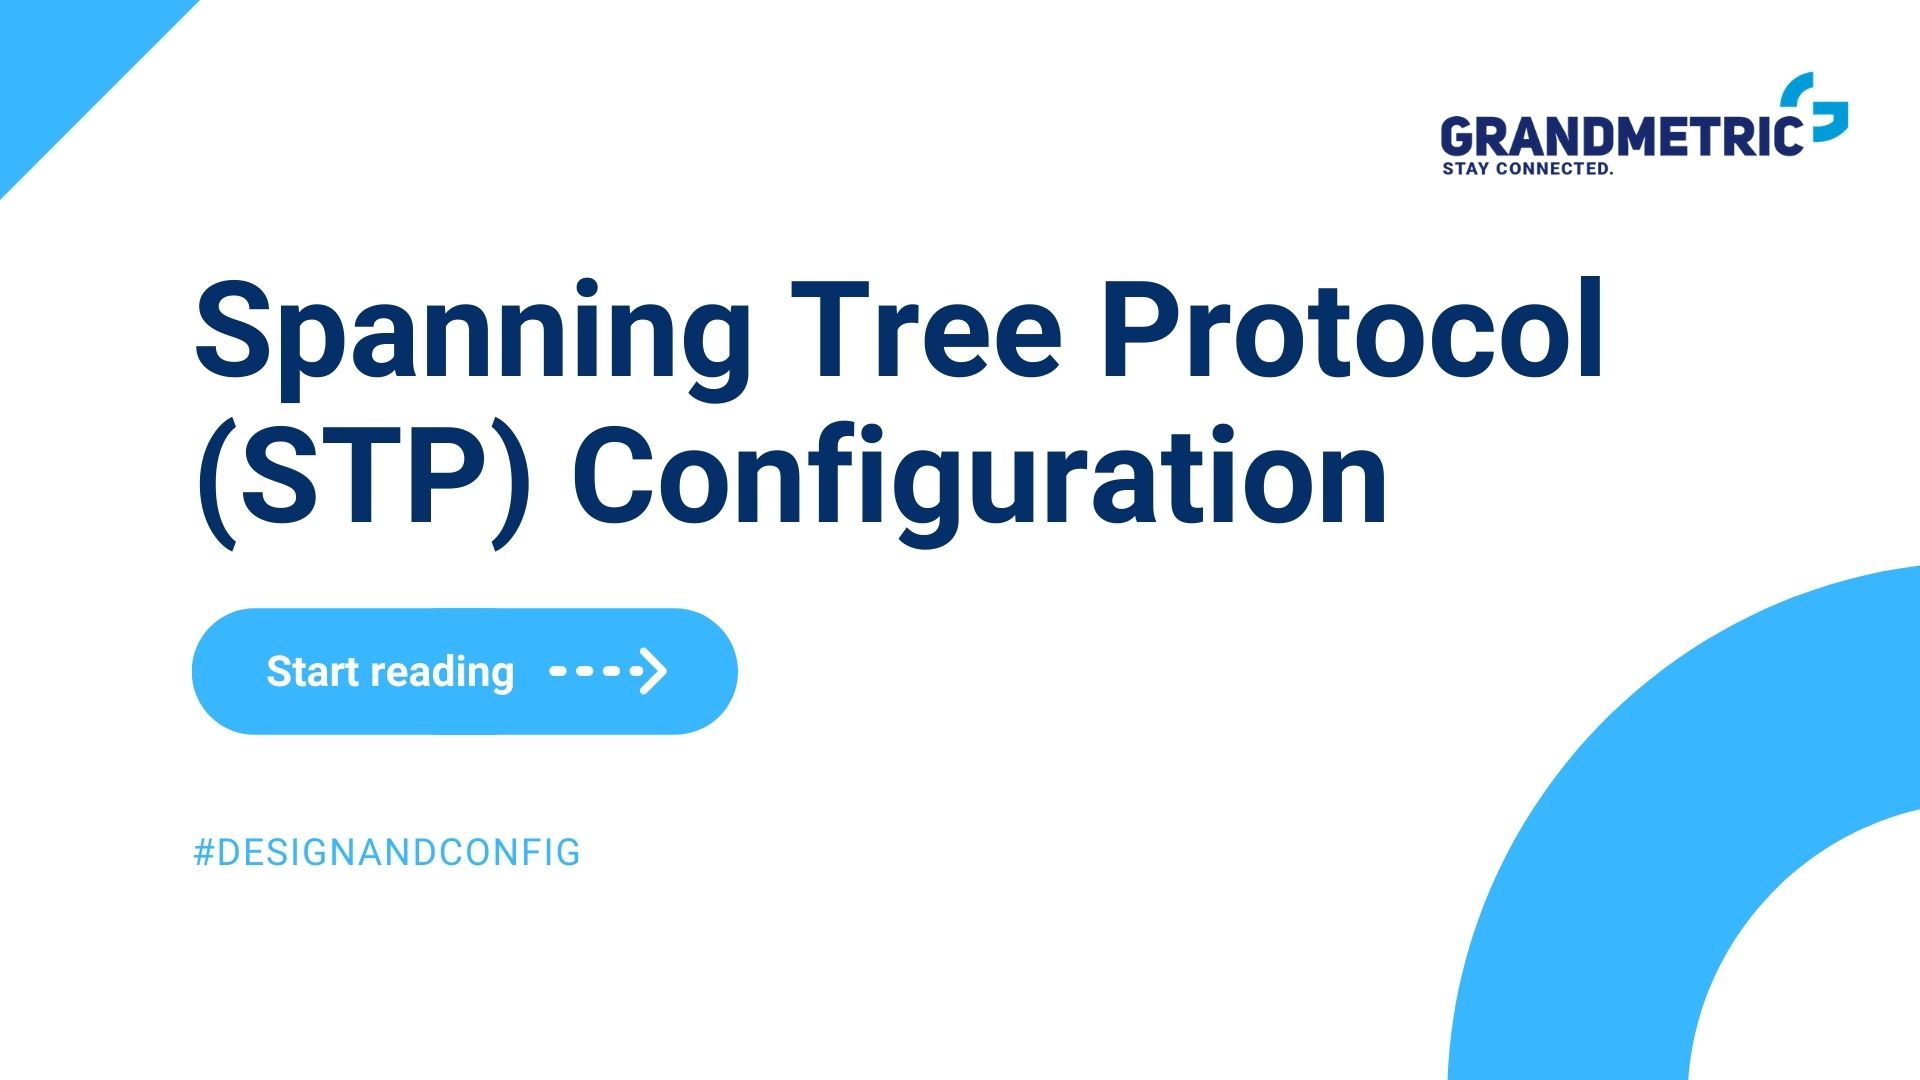 rivier scherp financiën Spanning Tree Protocol (STP) Configuration - Grandmetric